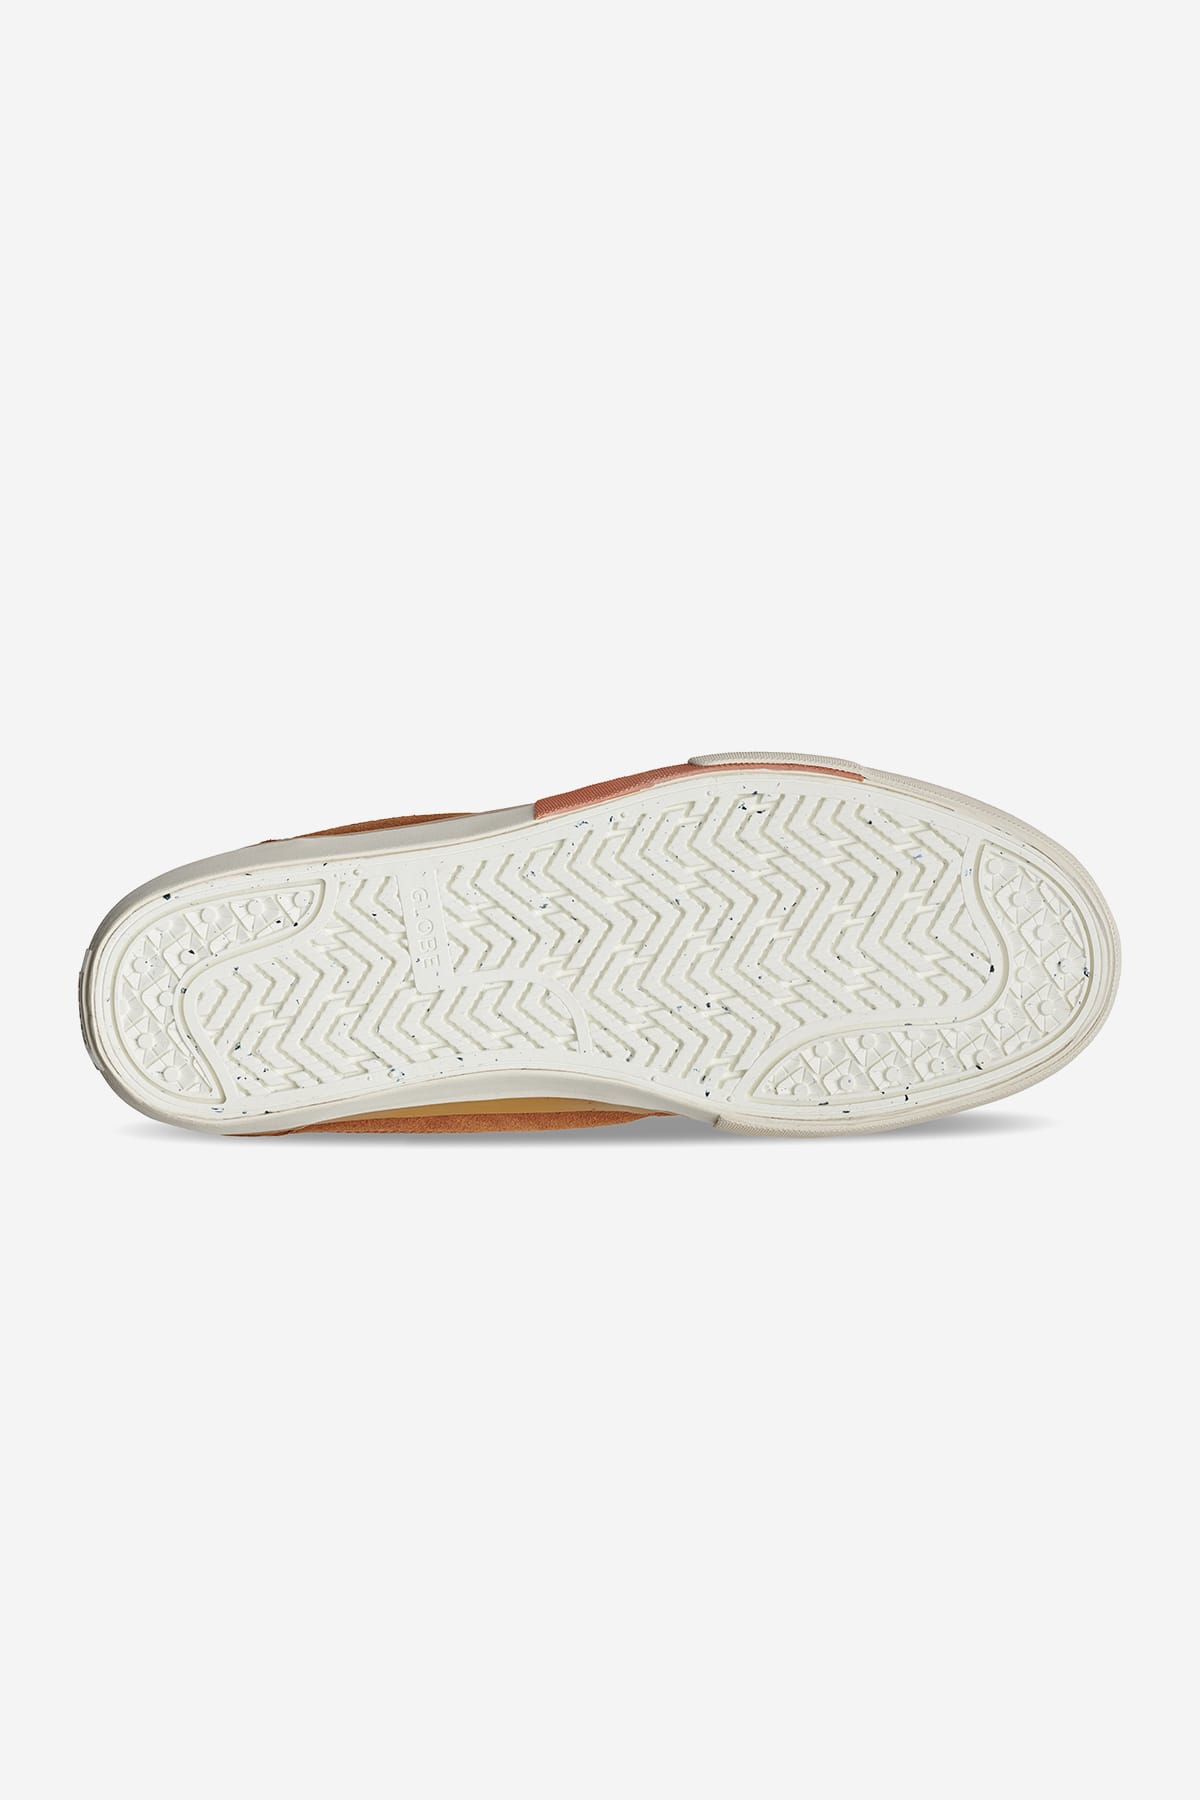 Globe - Mahalo Plus - Pecan/Antik - skateboard Schuhe